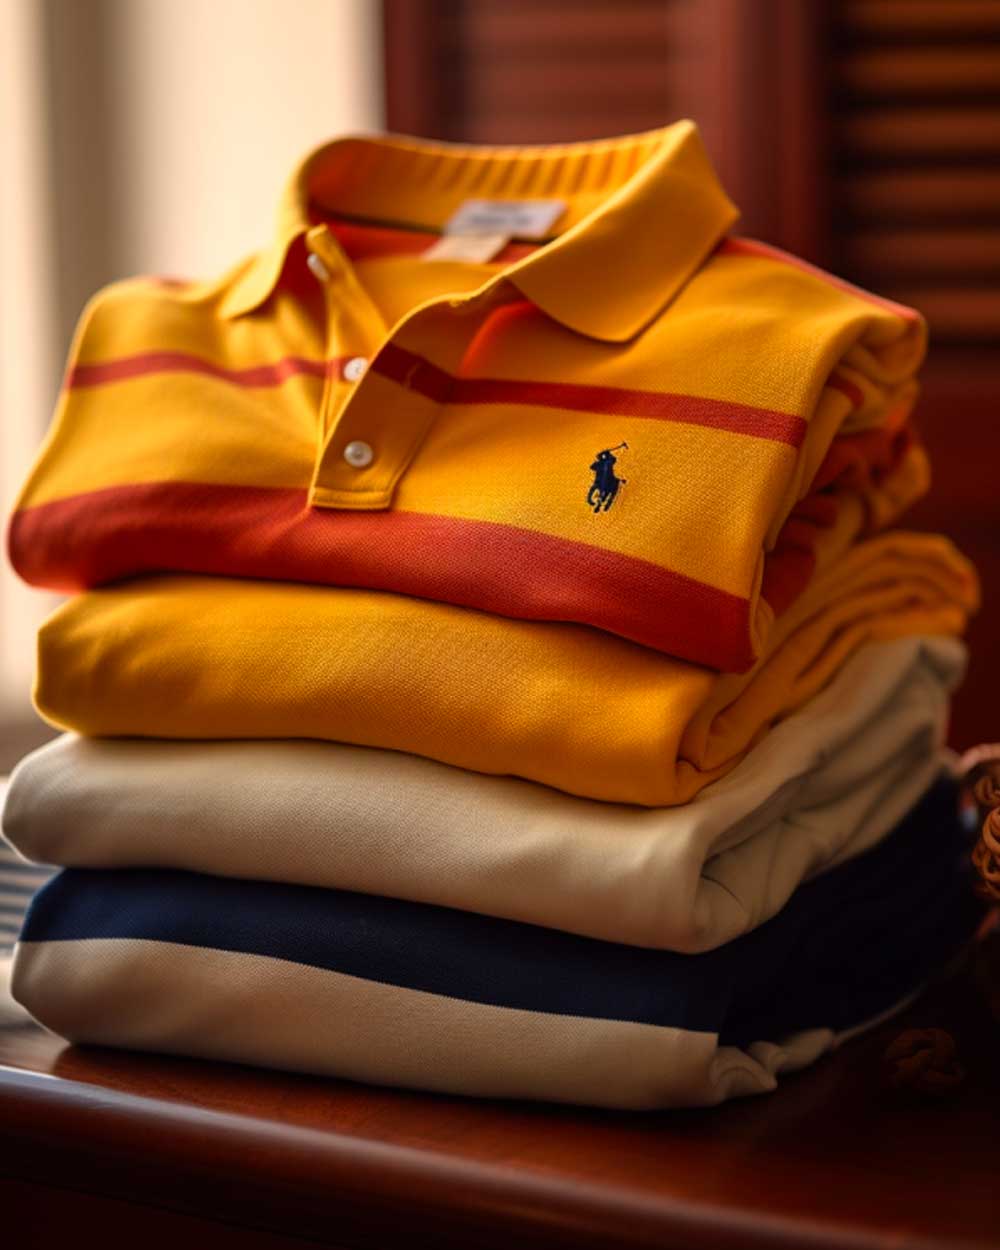 Preppy style Ralph Lauren Polo shirts